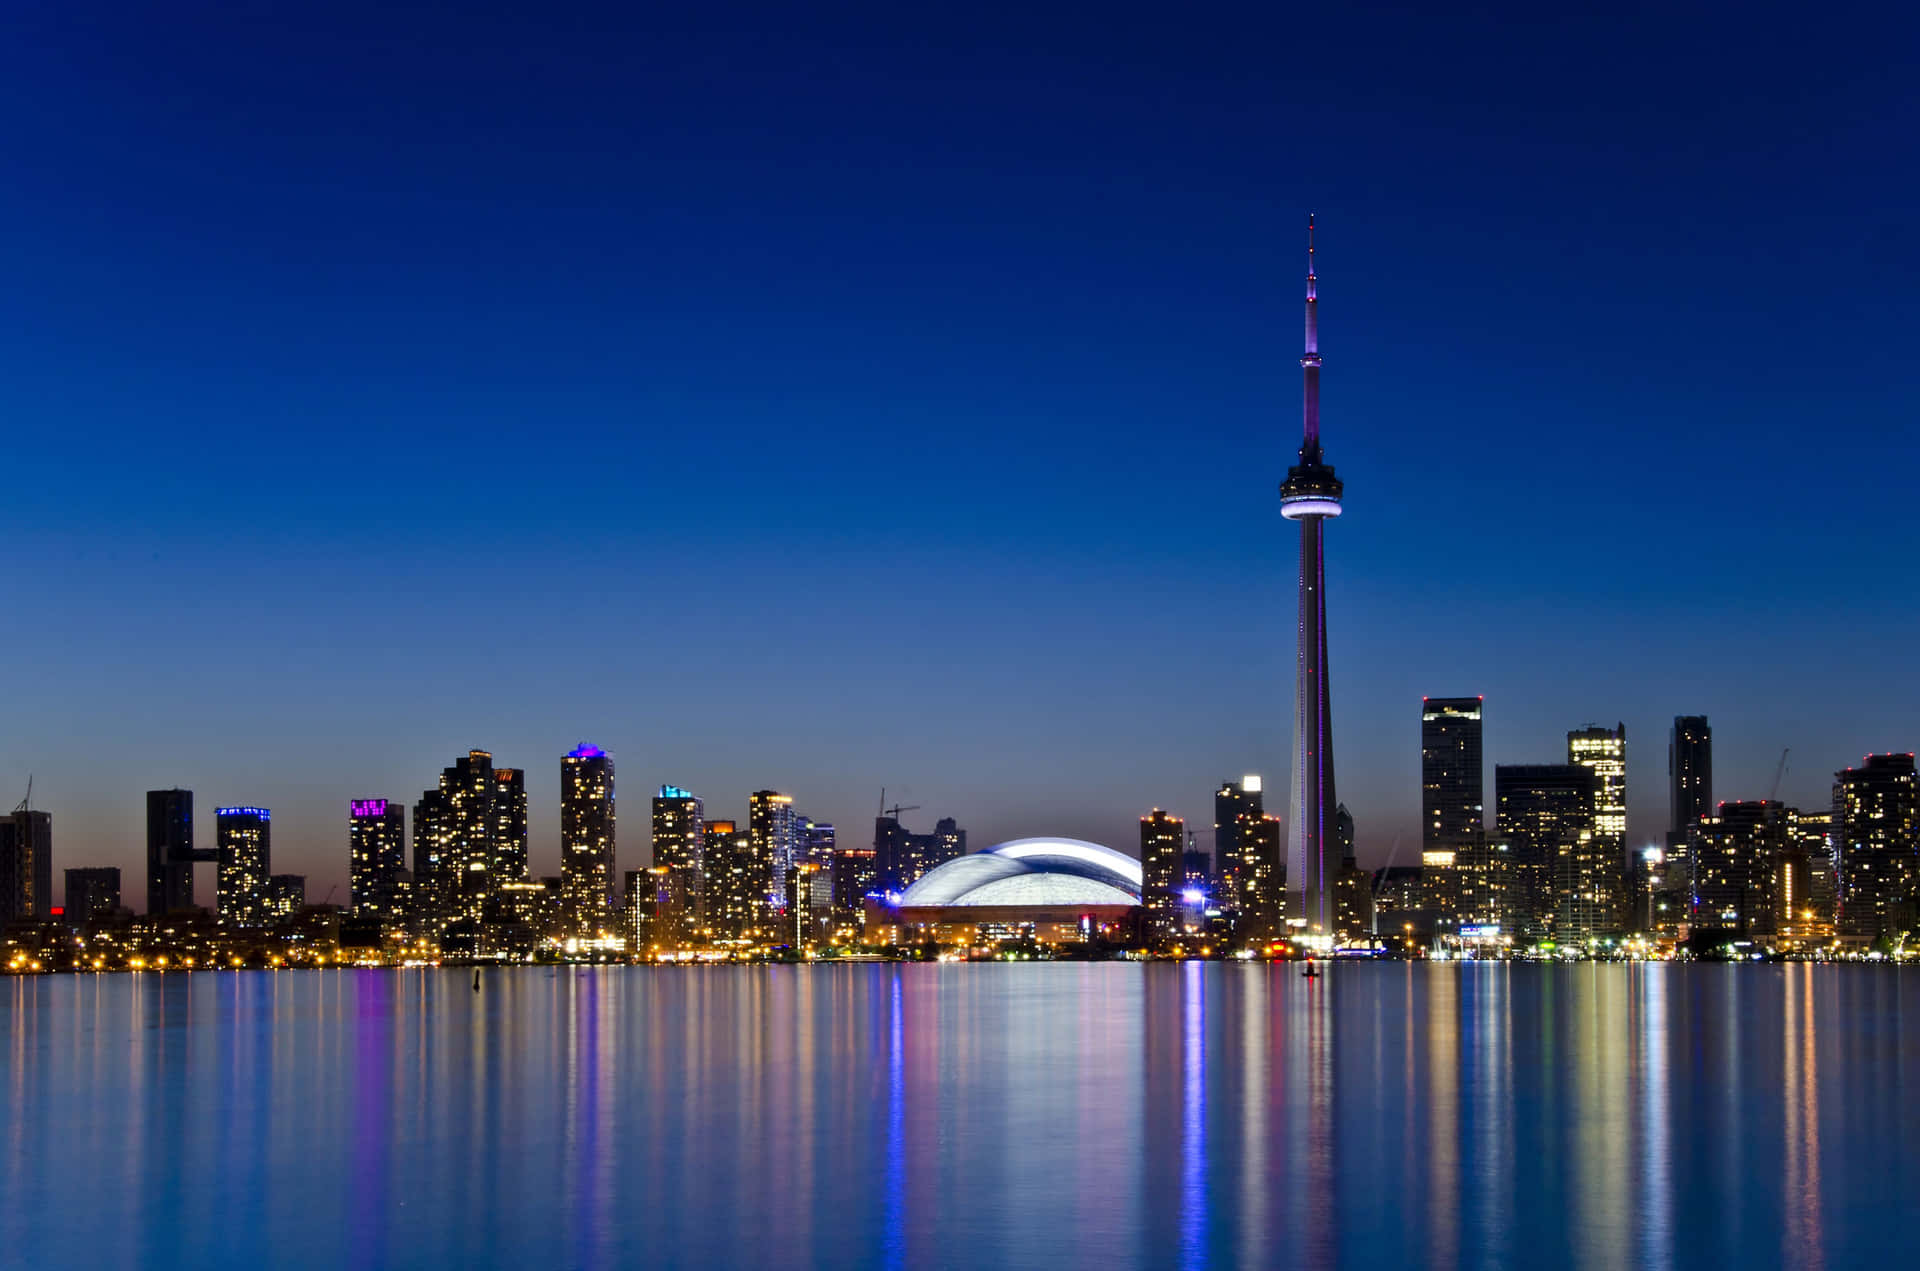 Enjoying the sight of Toronto's stunning skyline